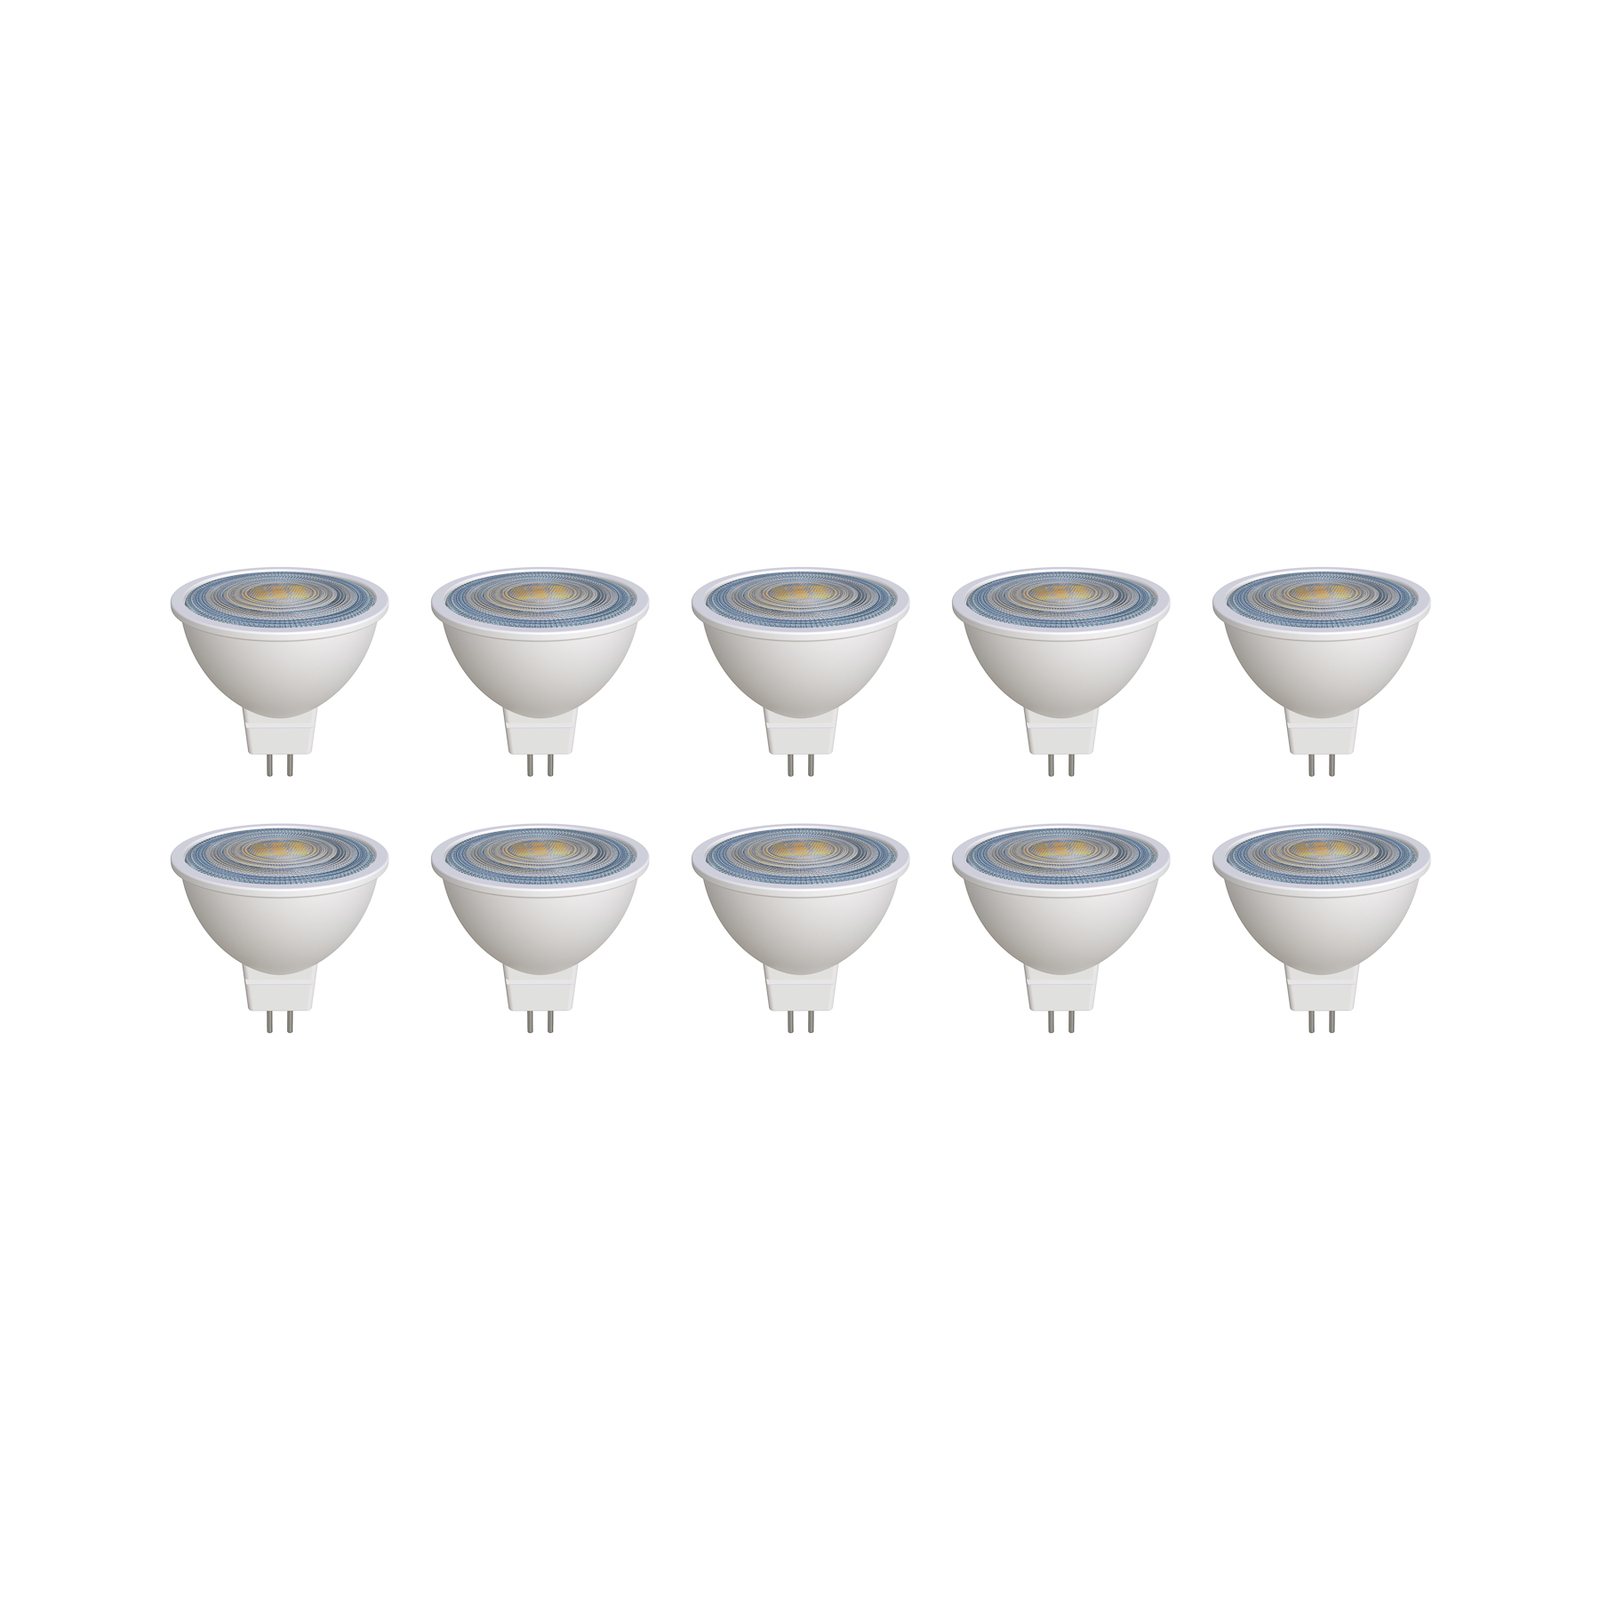 Prios LED refletor GU5.3 7.5W 621lm 36° branco 830 conjunto de 10